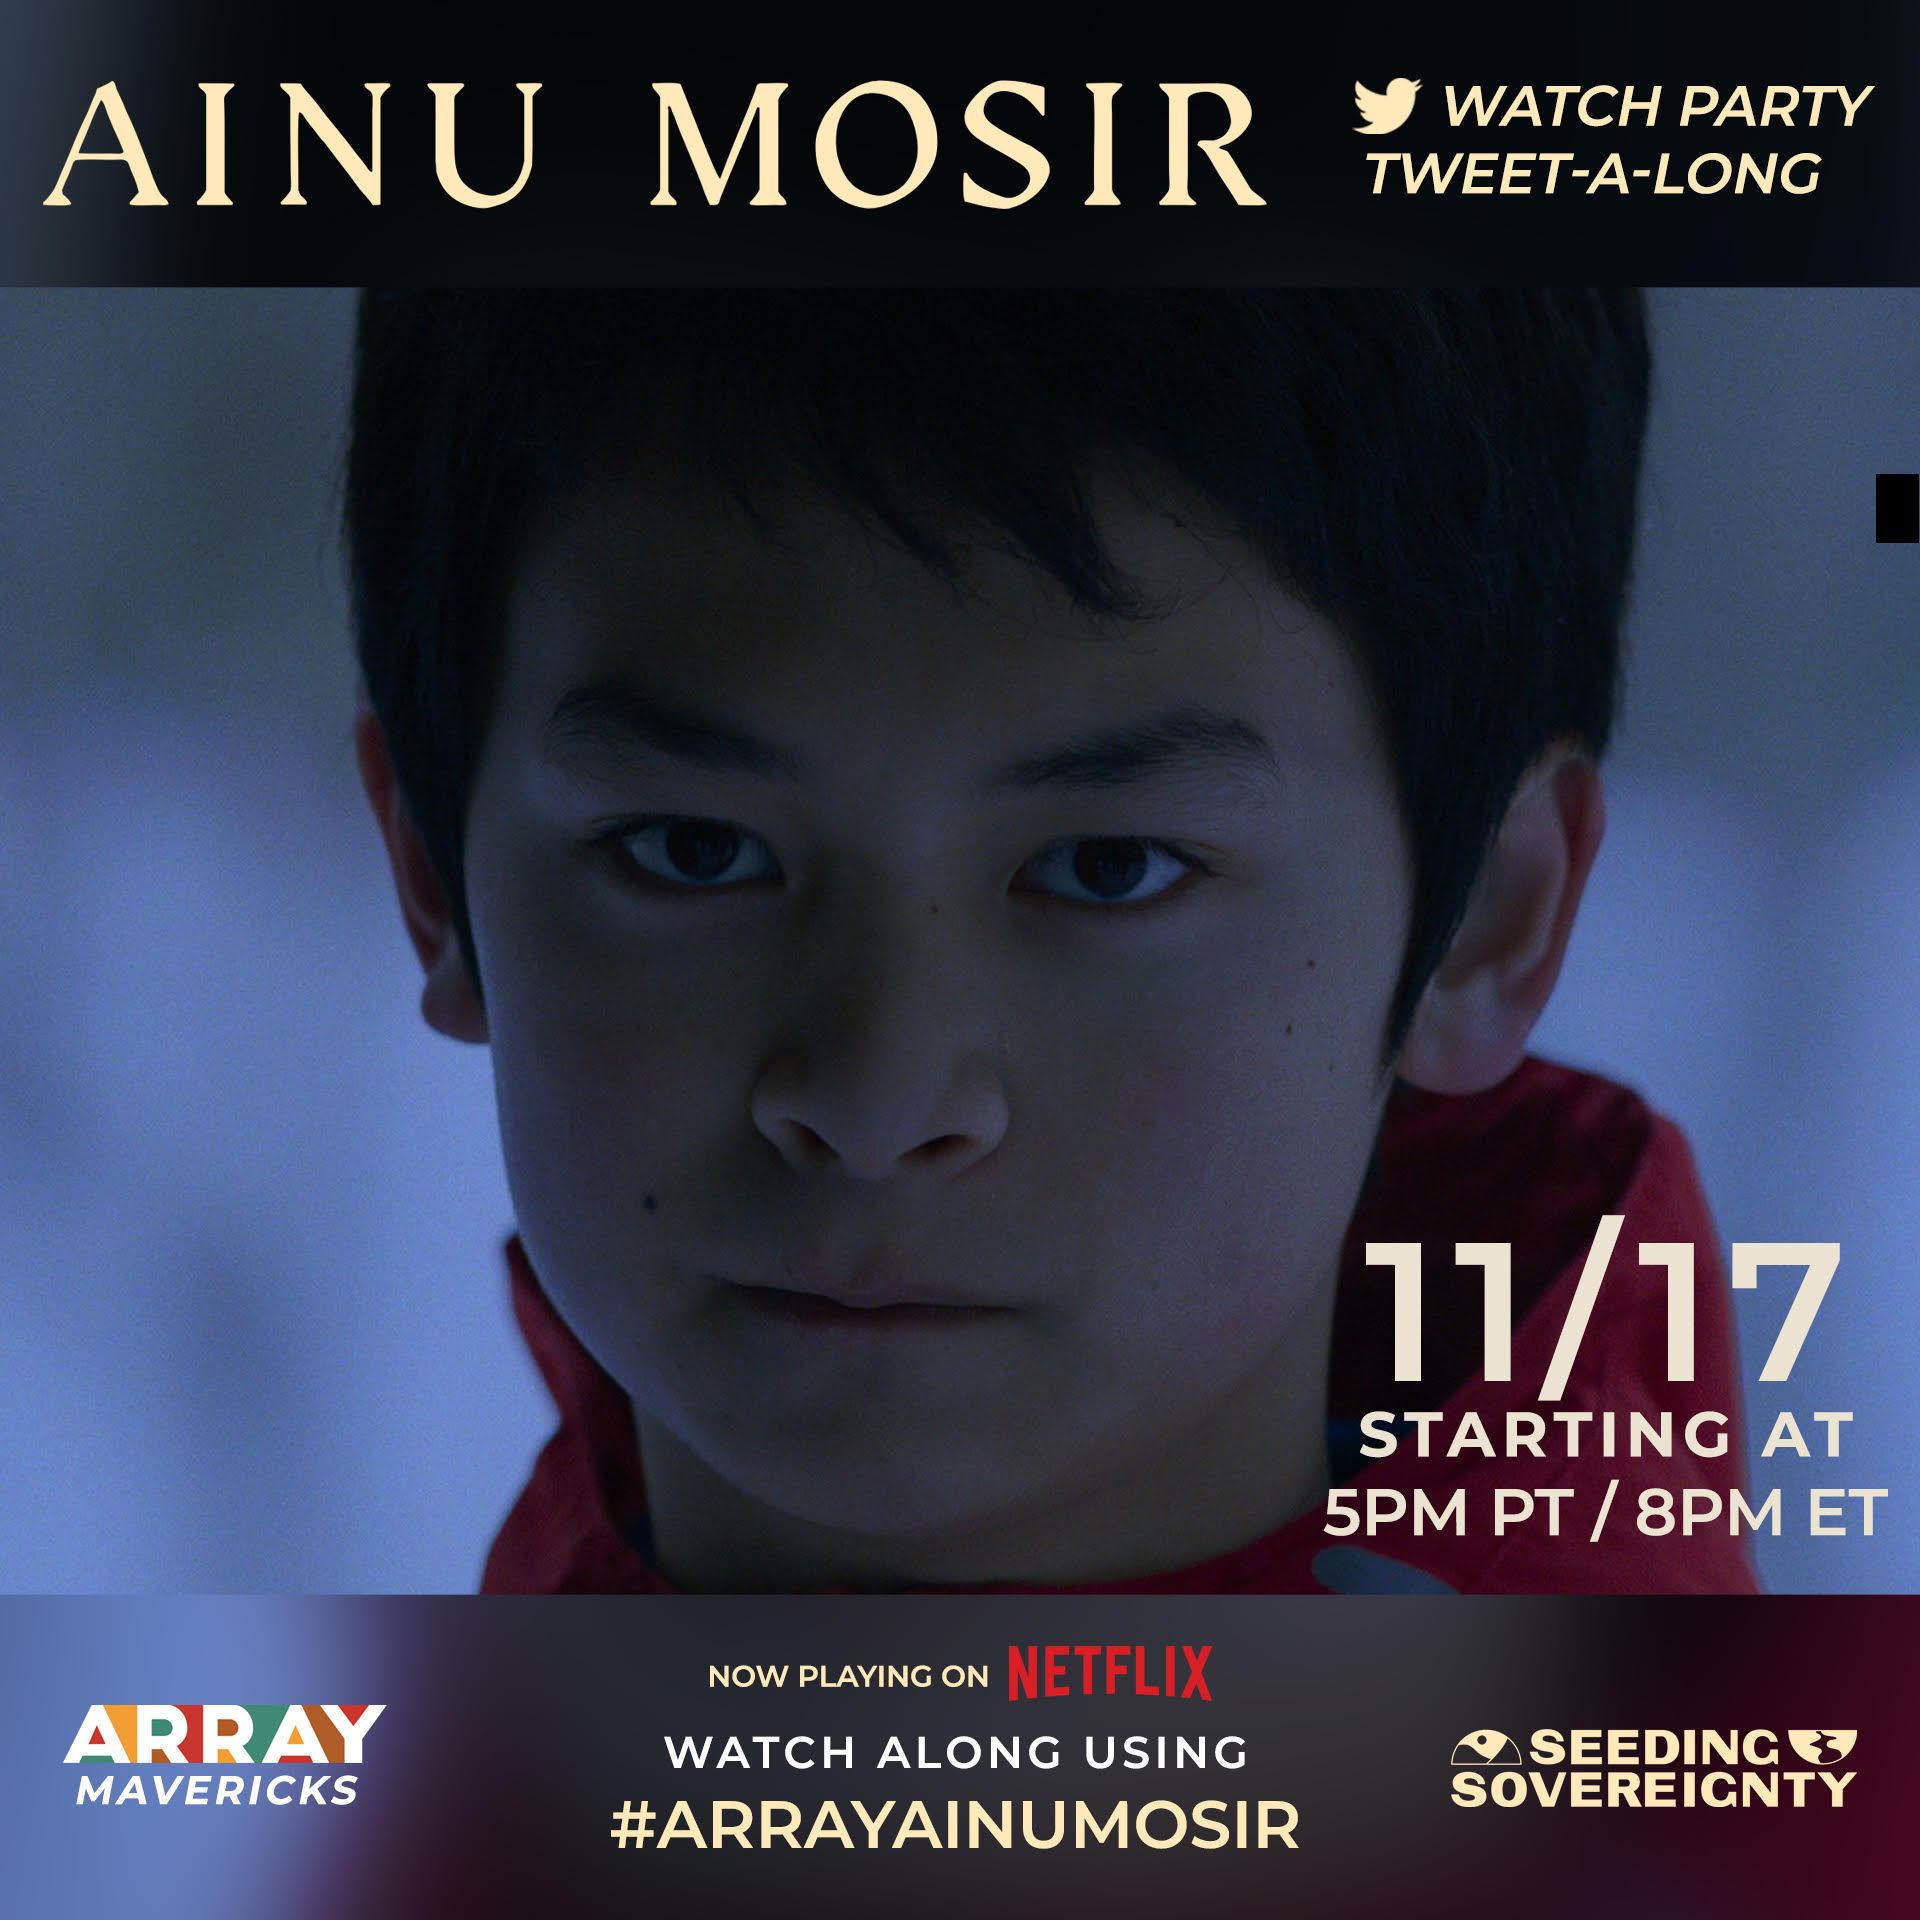 Ainu Mosir Netflix Premiere, Watch Party